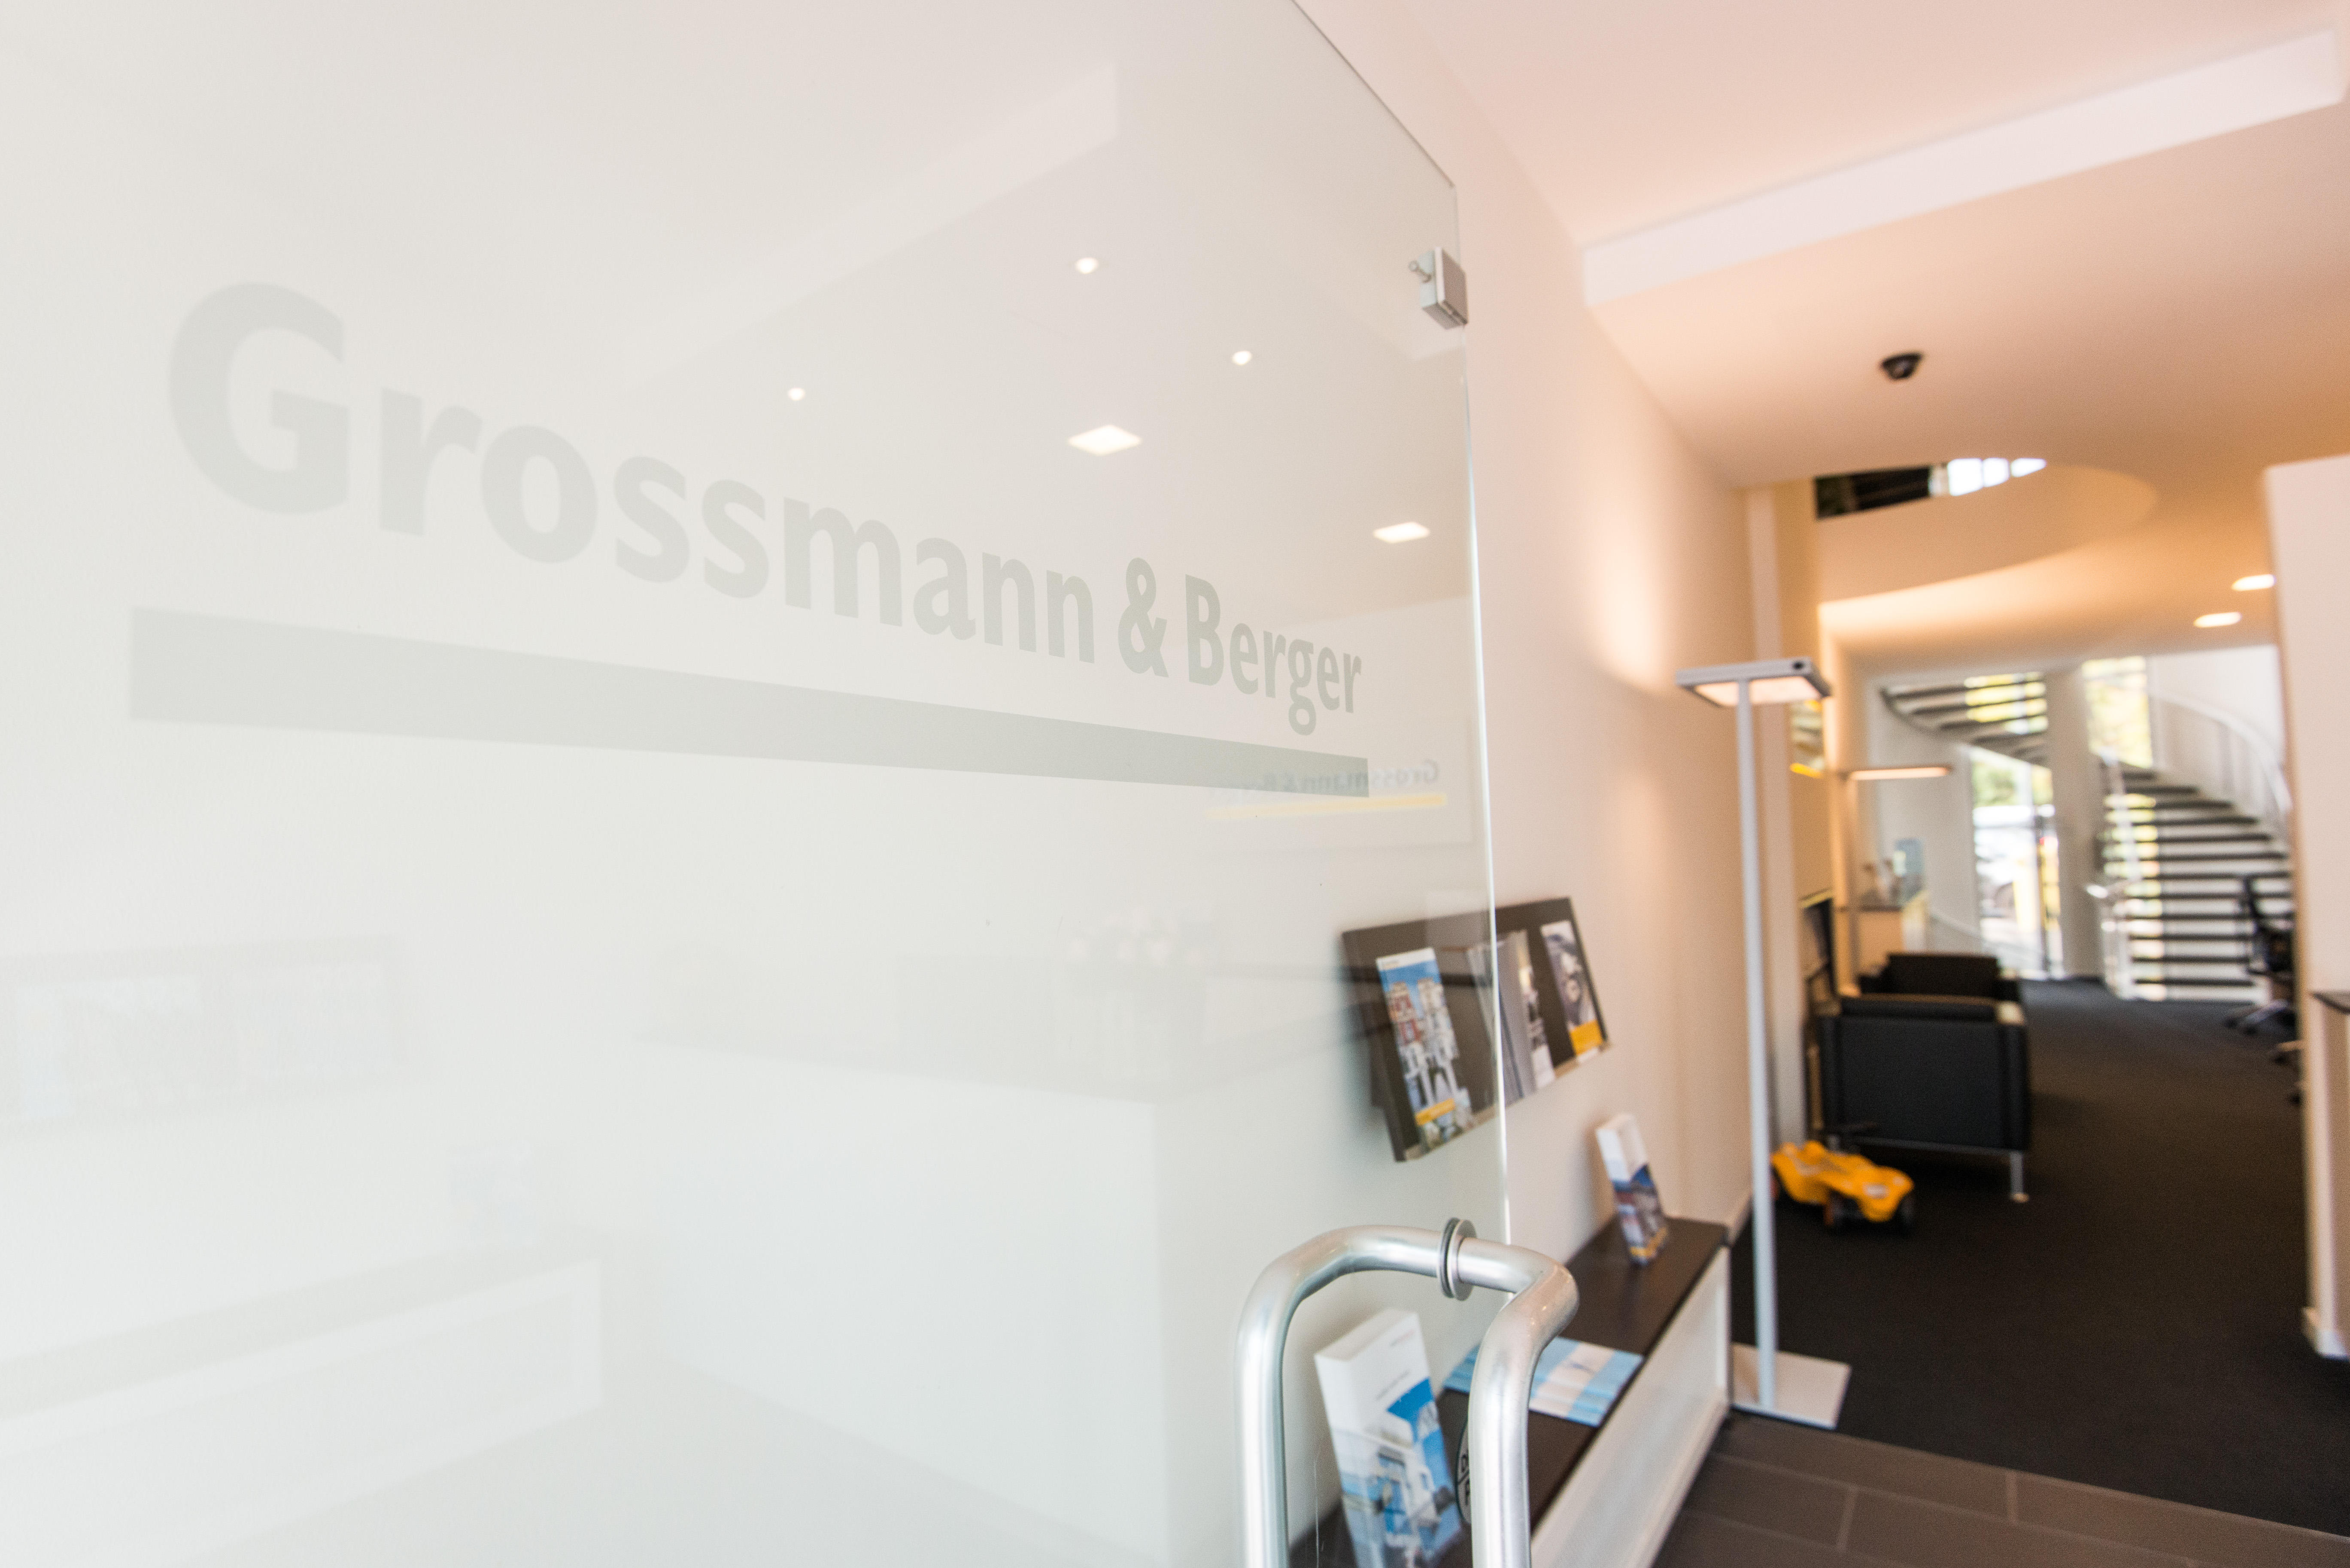 Bild 9 Grossmann & Berger GmbH Immobilien in Hamburg